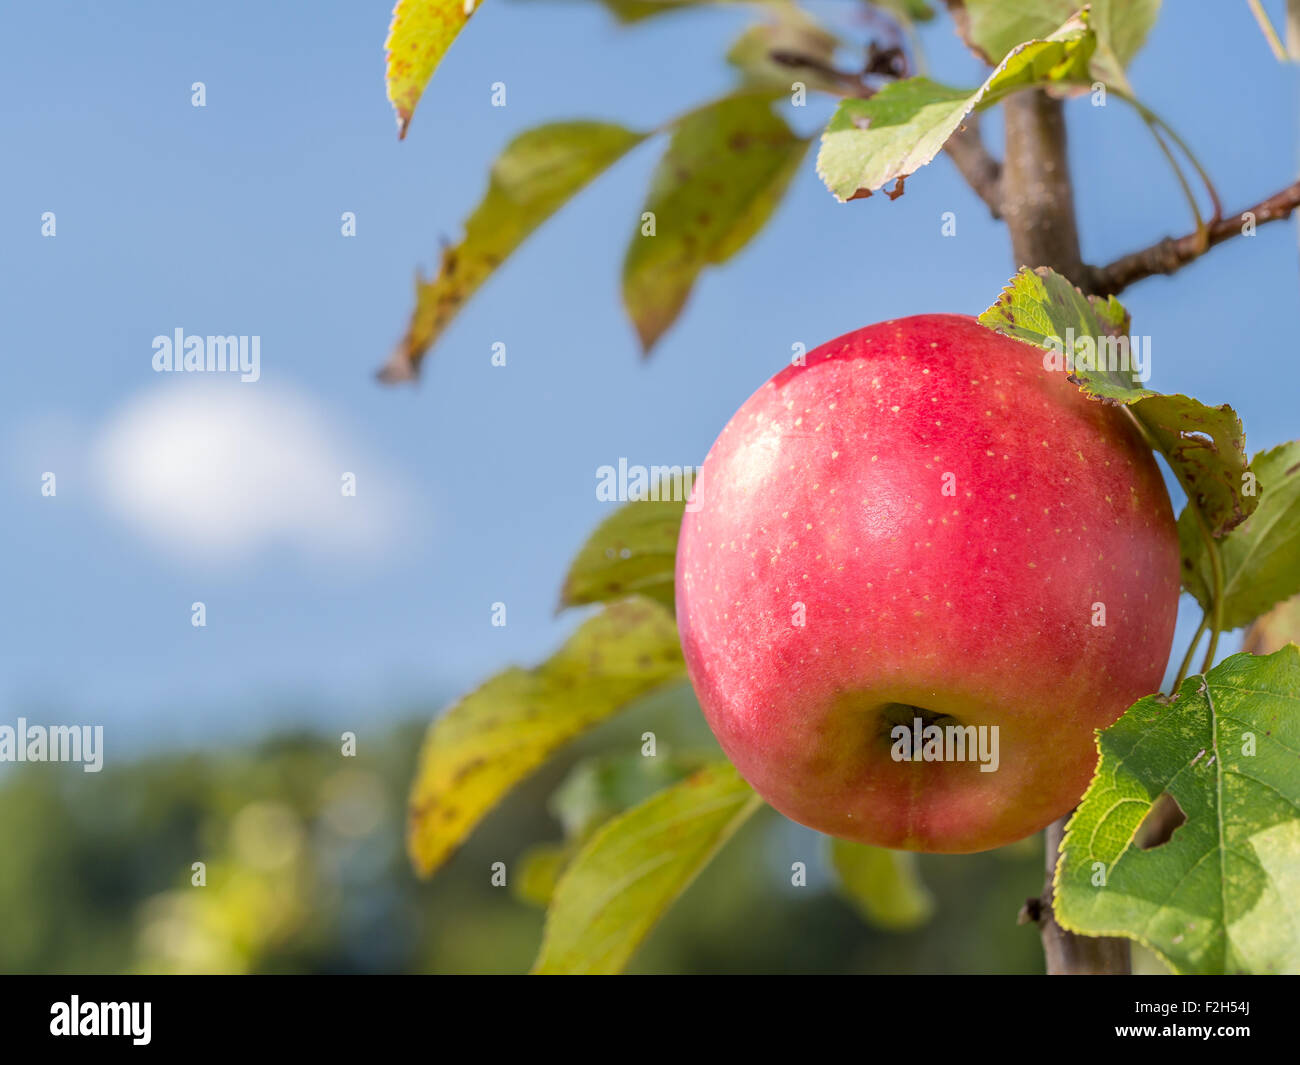 Cox orange pippin apple ripening on tree Stock Photo